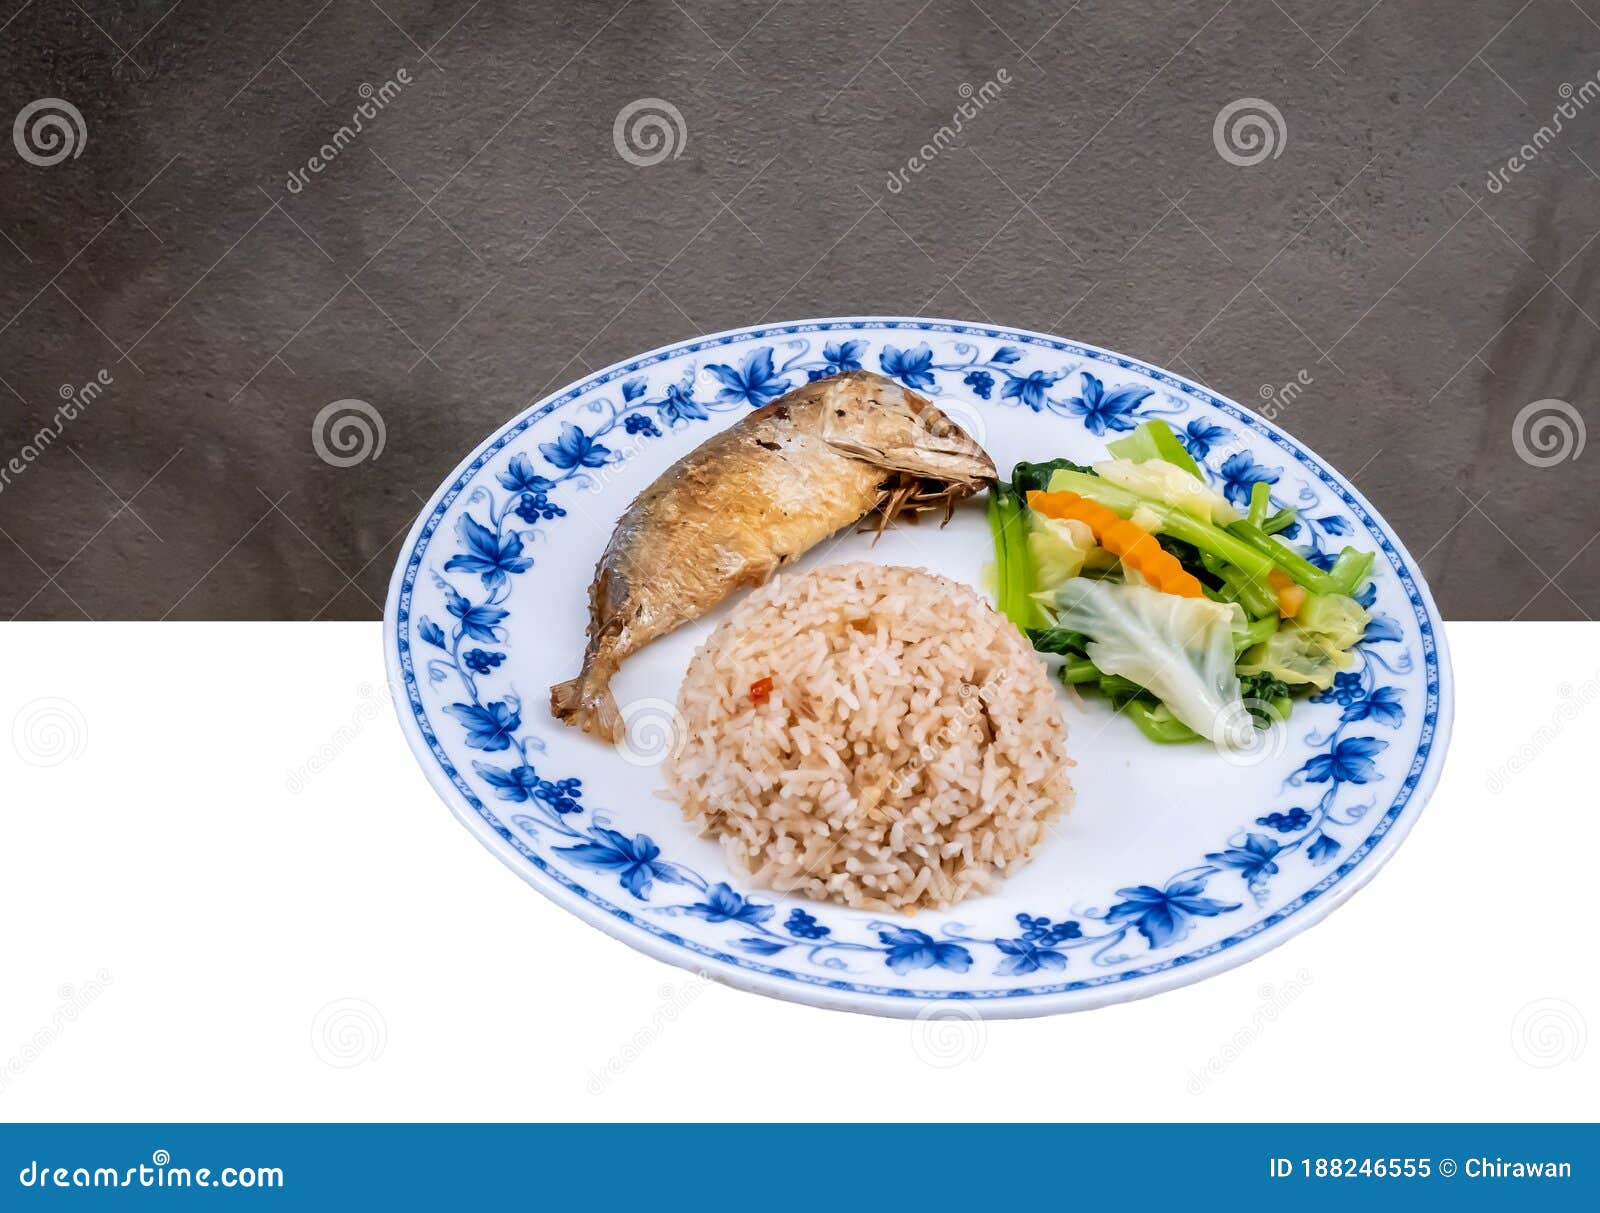 fried rice with mackerel chili pasteÃ Â¹Æ